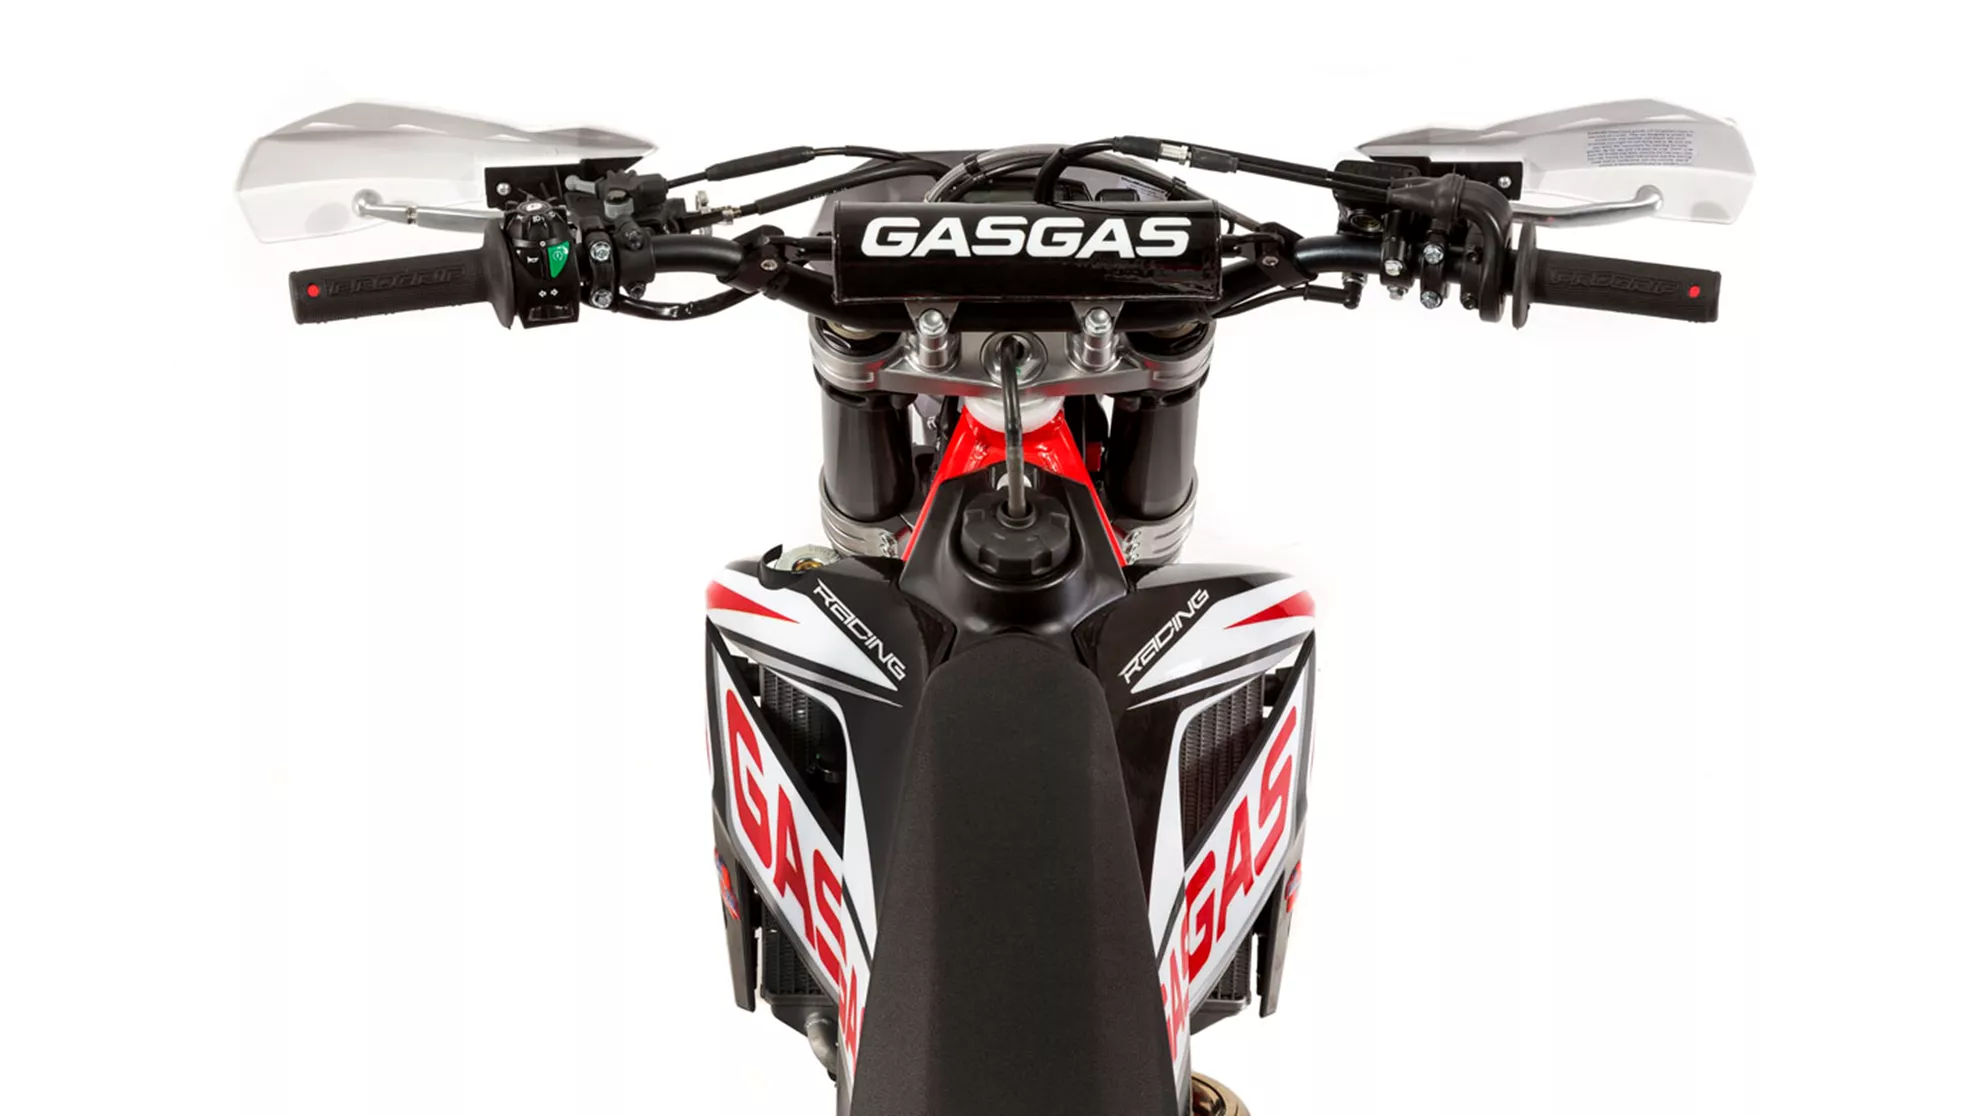 GASGAS EC 250 F Racing - Image 10